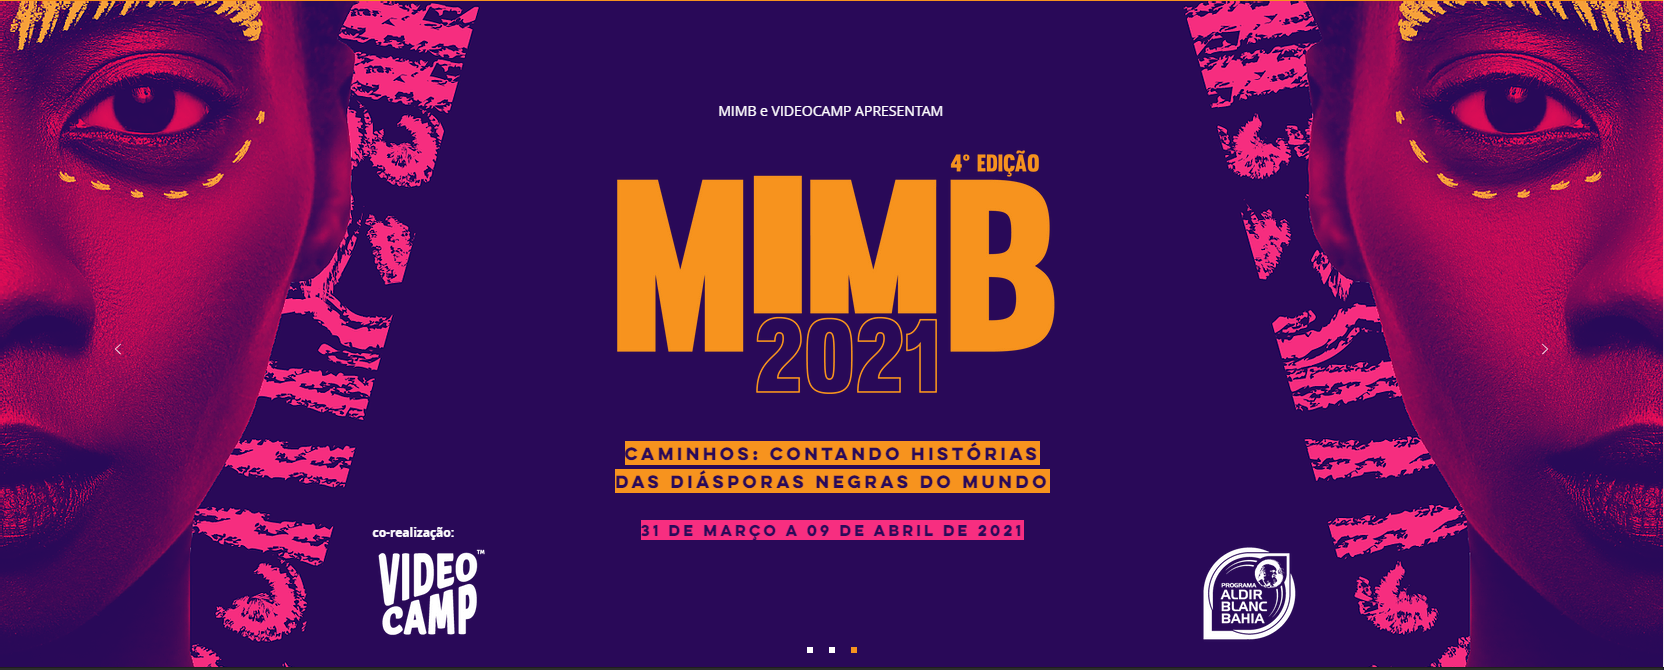 Mostra Itinerante de Cinemas Negros - Mahomed Bamba (MIMB)